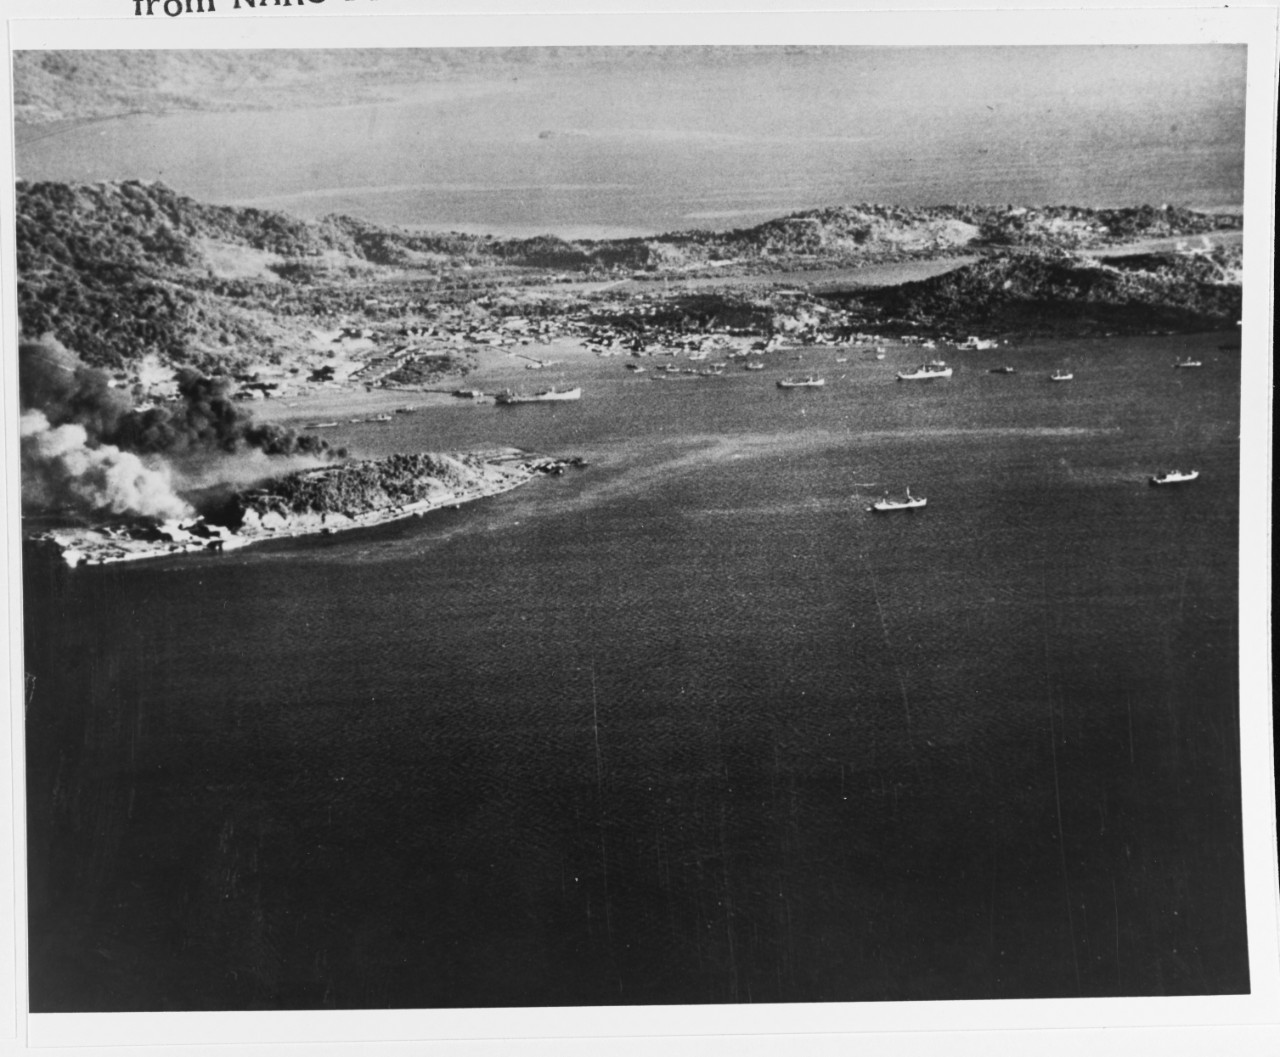 Carrier raid on Truk, 17-18 February 1944.